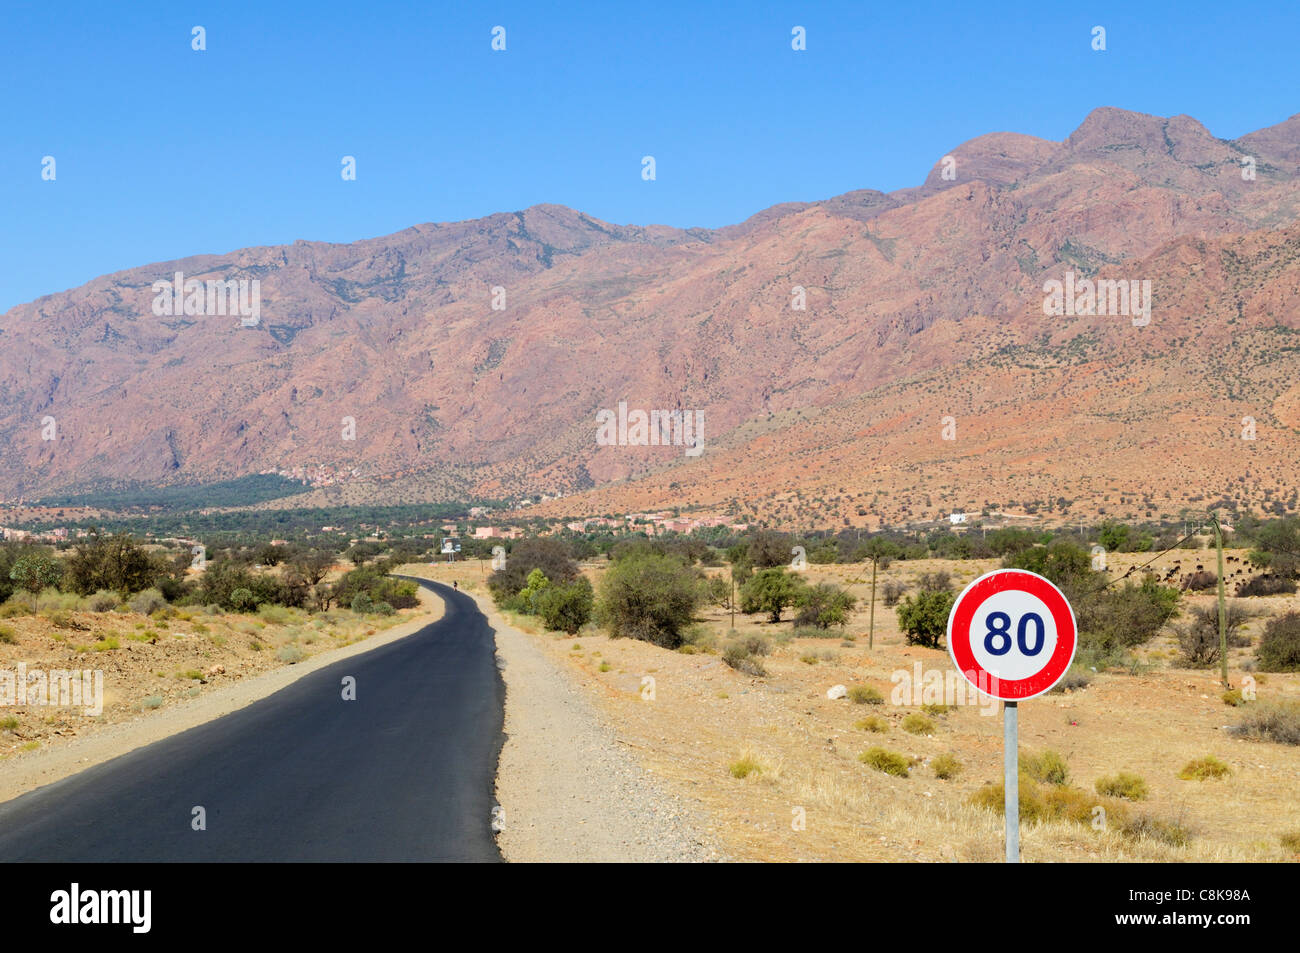 80 Kph Speed Limit sign on the road along the Ameln Valley near Tafraoute, Souss-Massa-Draa Region, Morocco Stock Photo